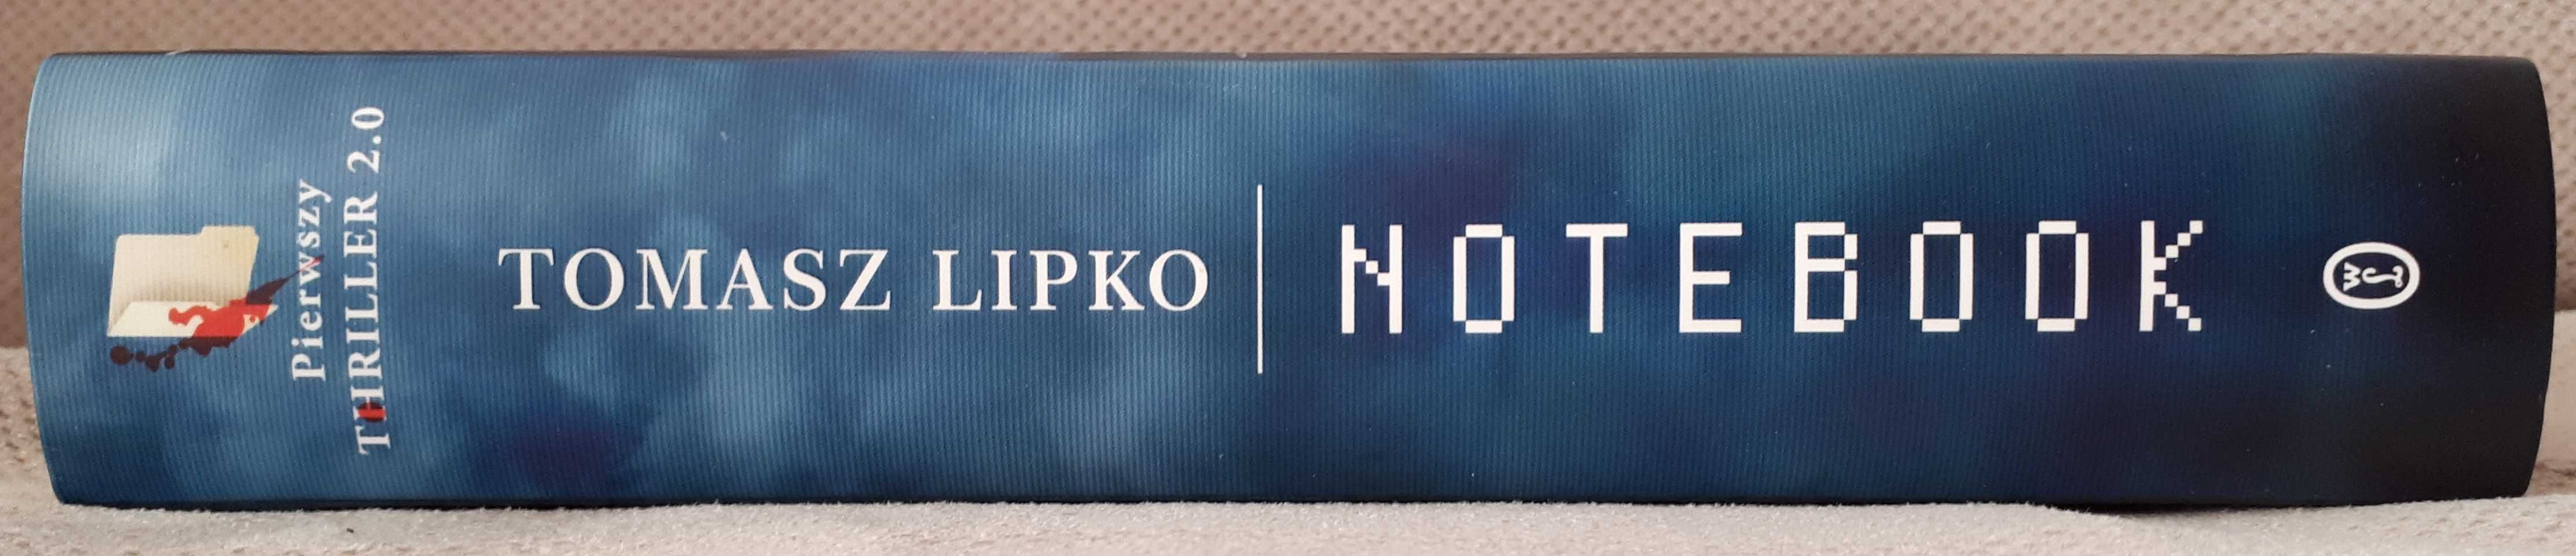 "Notebook" Tomasz Lipko, interaktywny cyberthriller